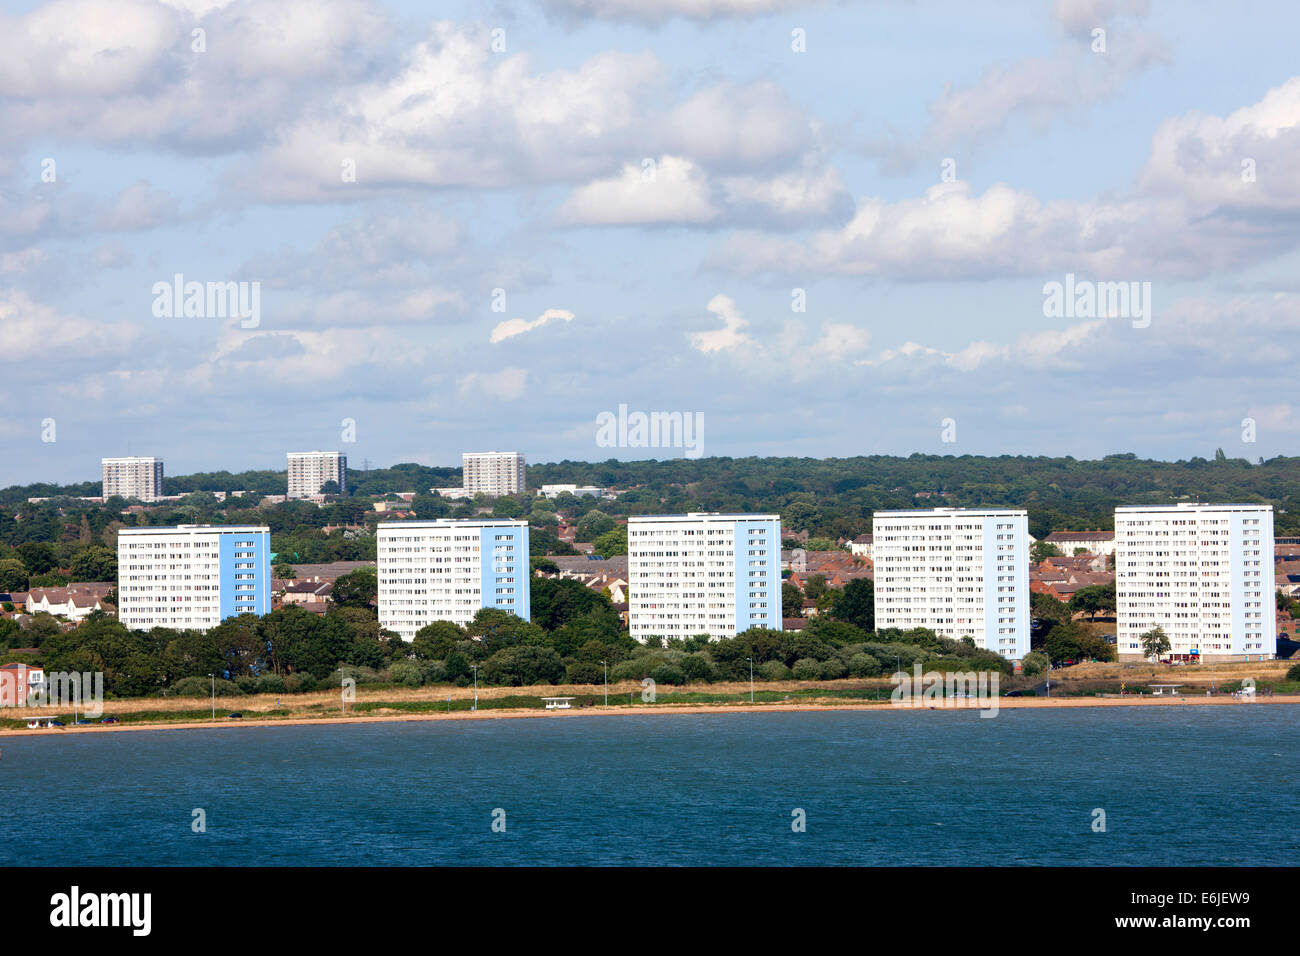 Southampton Docks coastline high rise flats Stock Photo